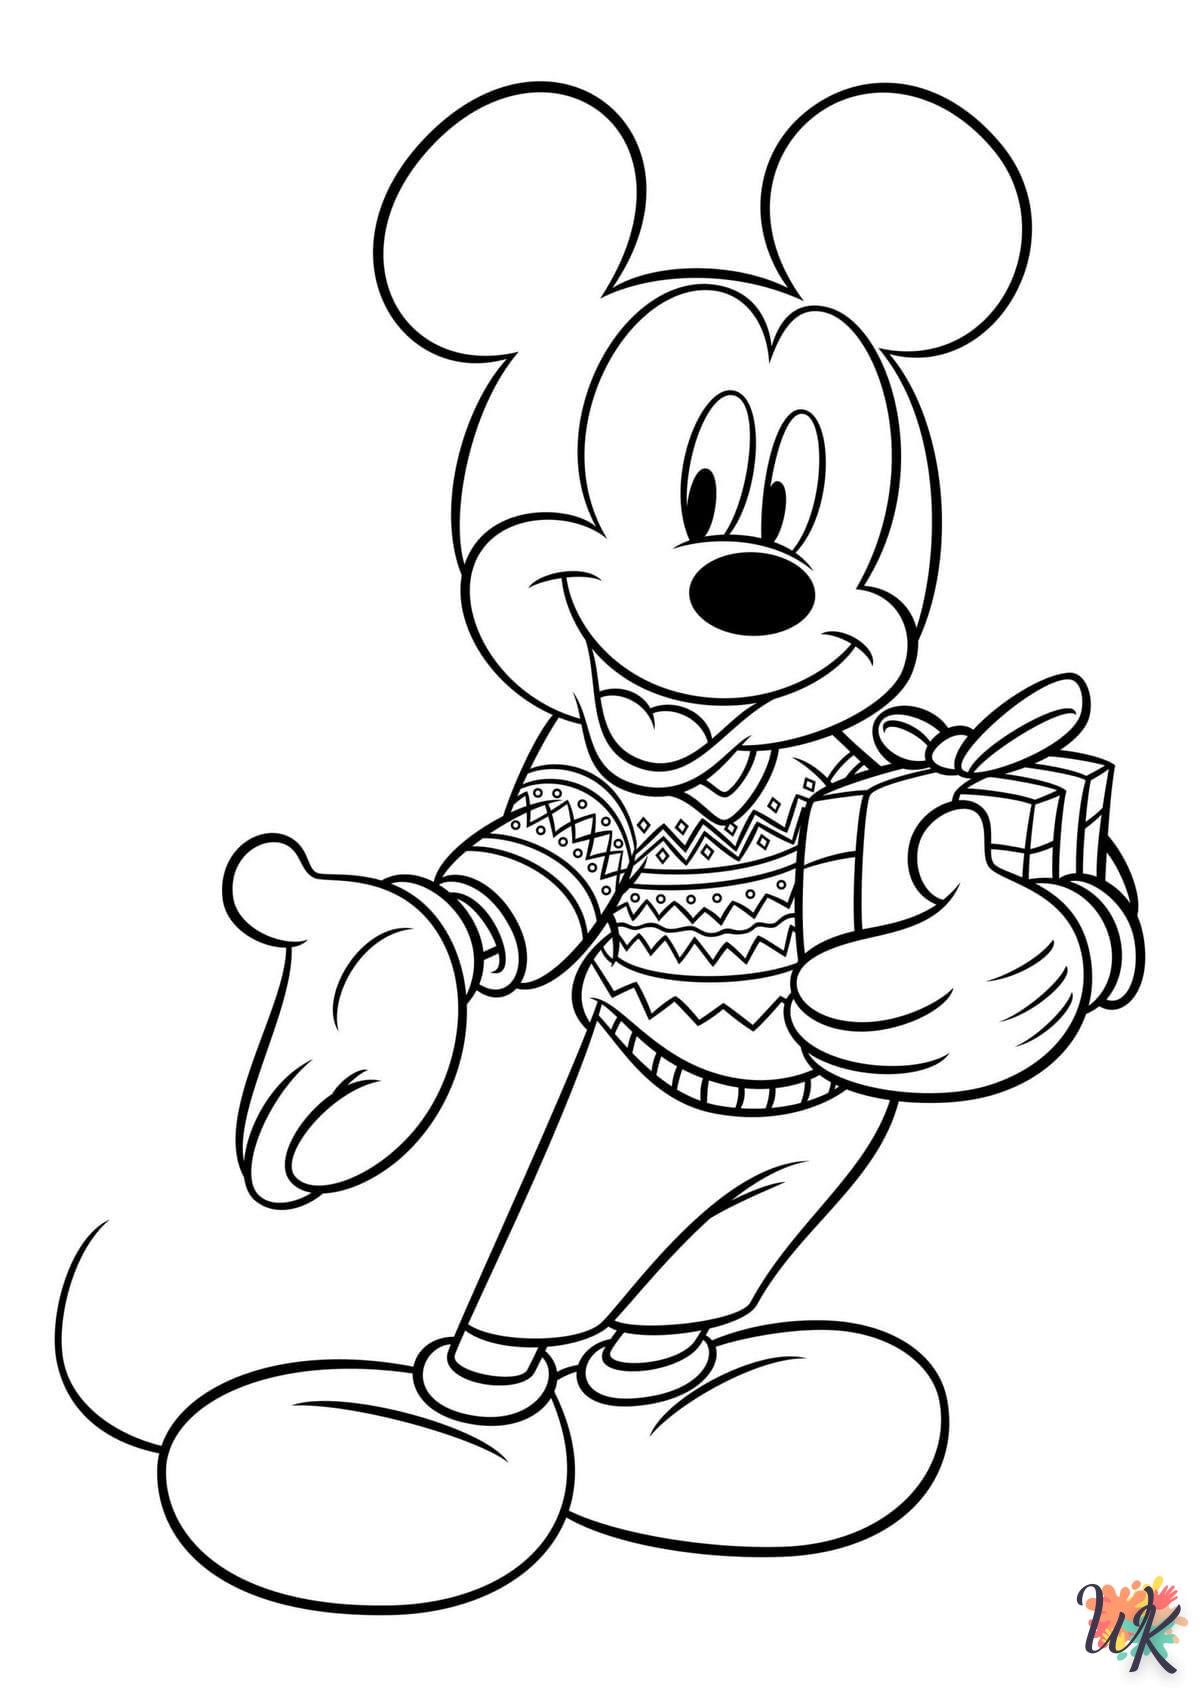 Kleurplaat Mickey Mouse41